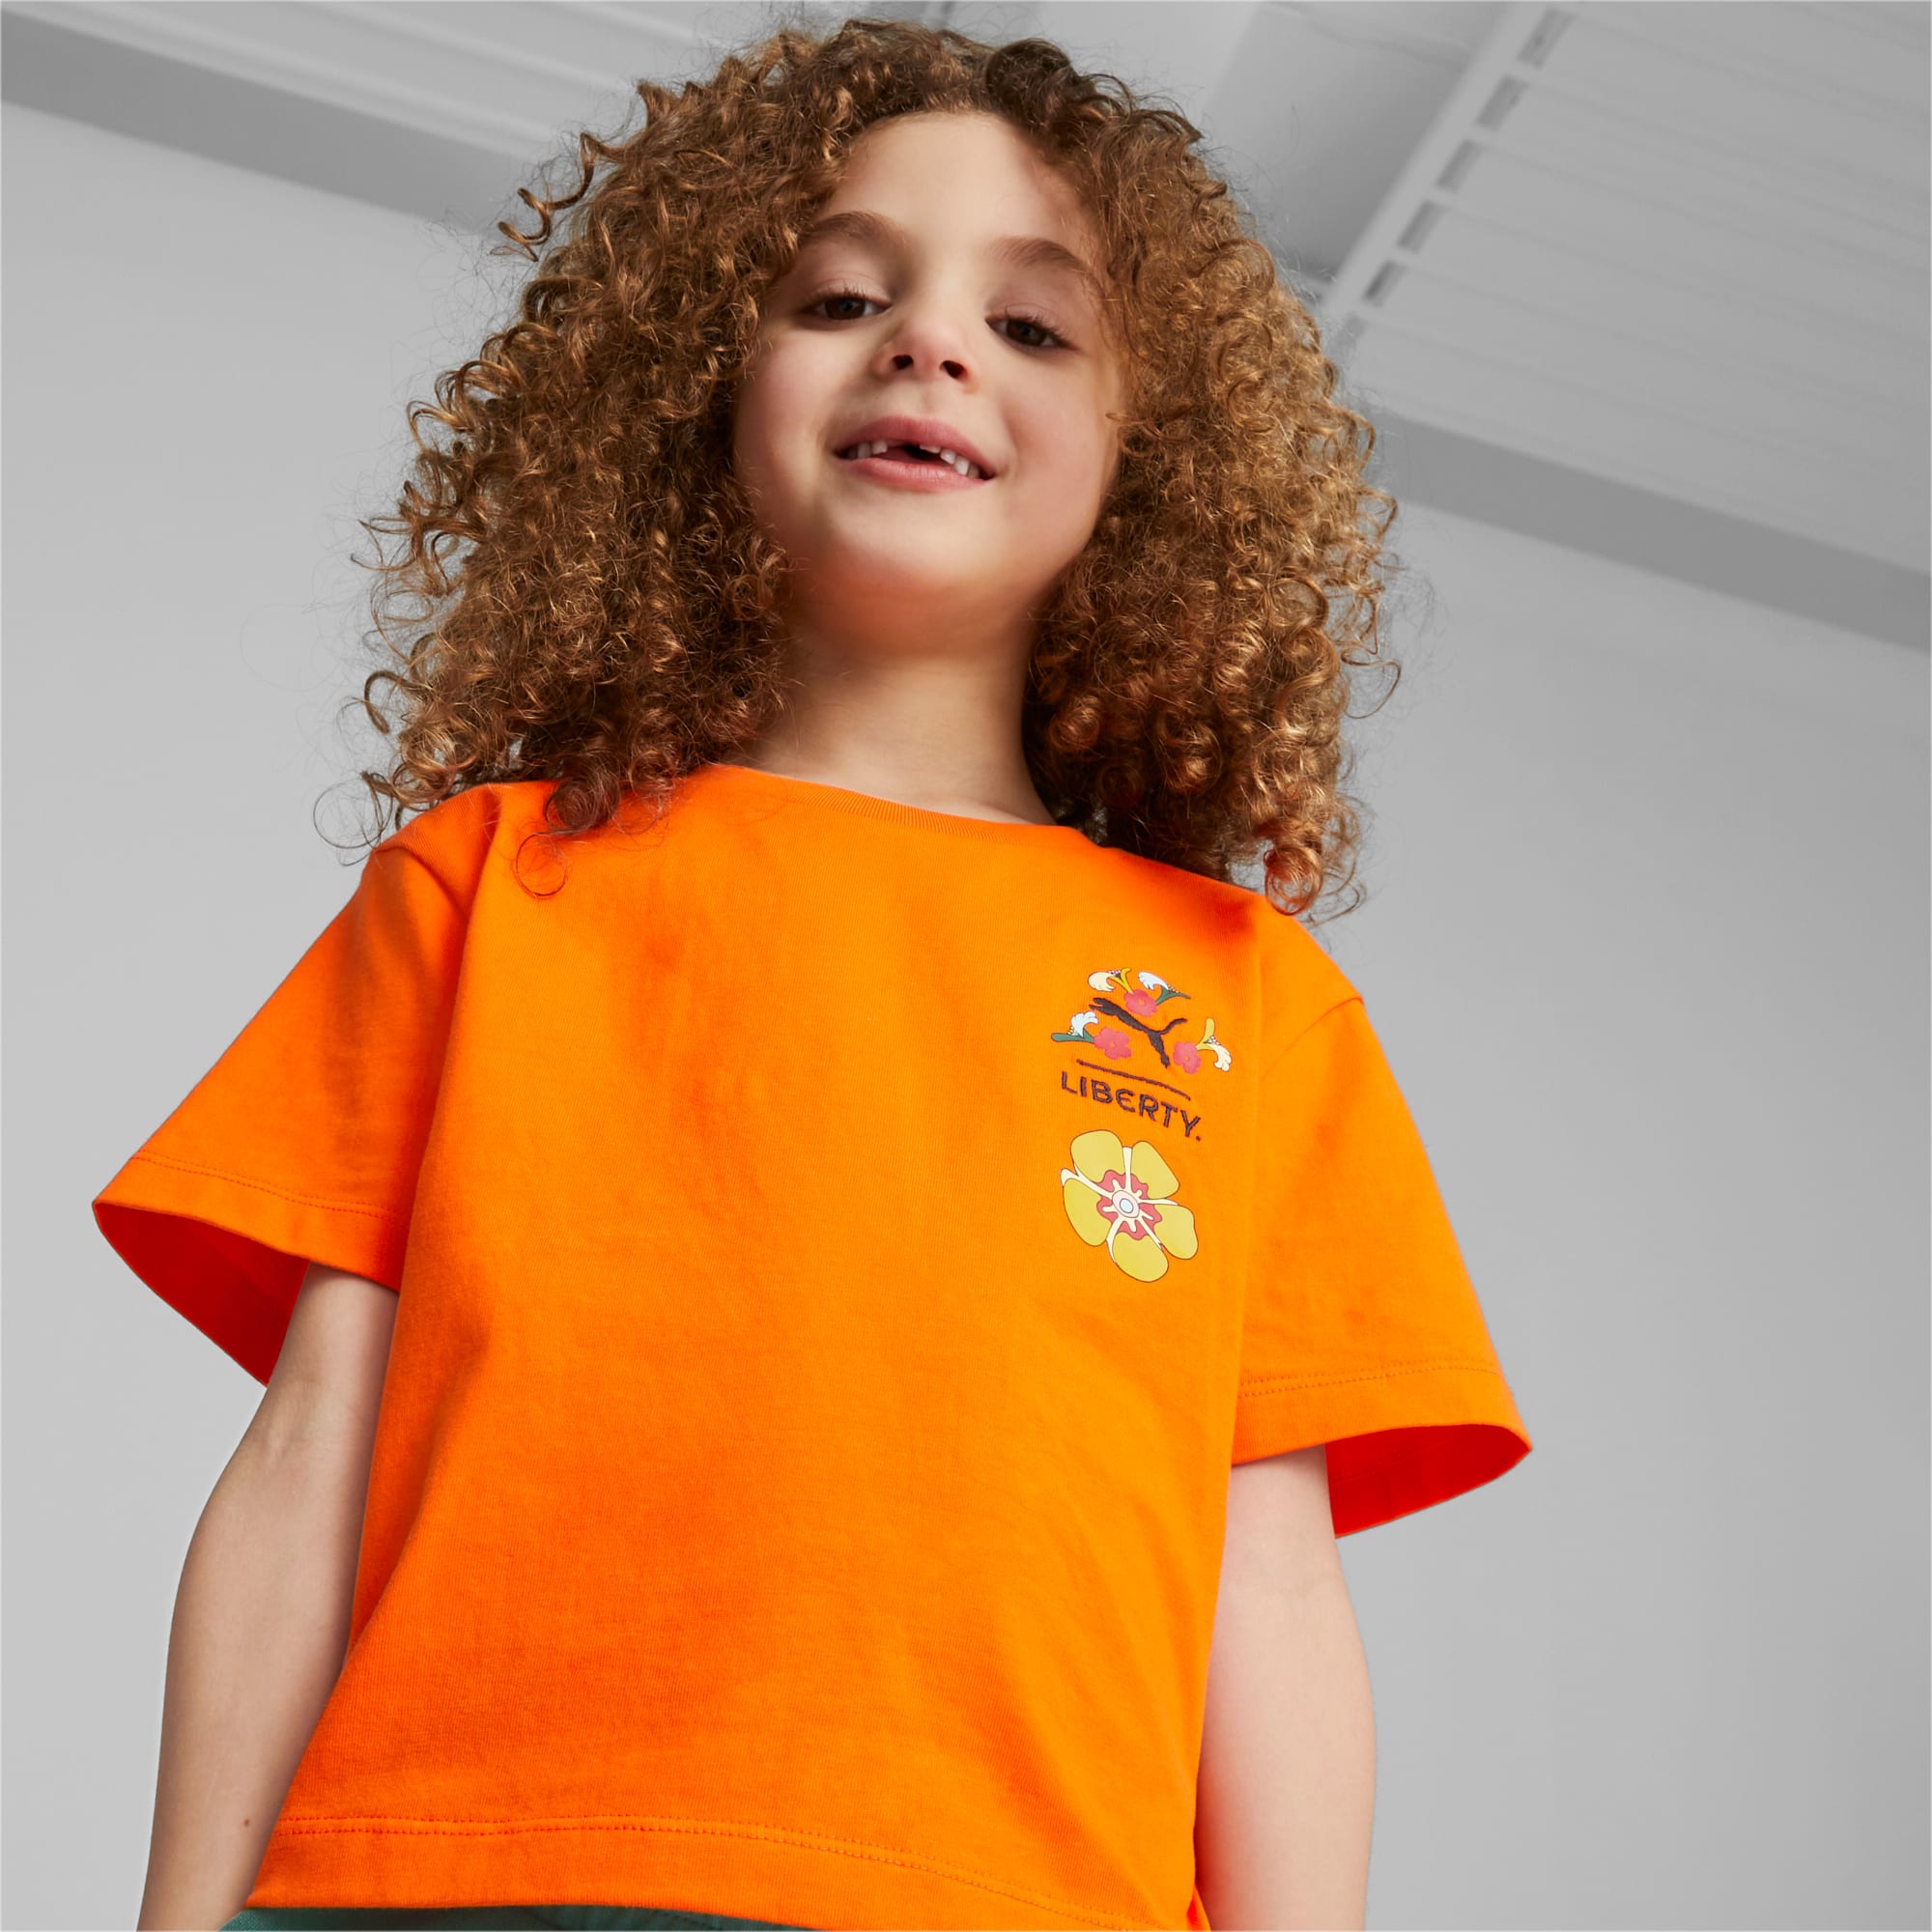 PUMA X Liberty T-Shirt Kids, Cayenne Pepper